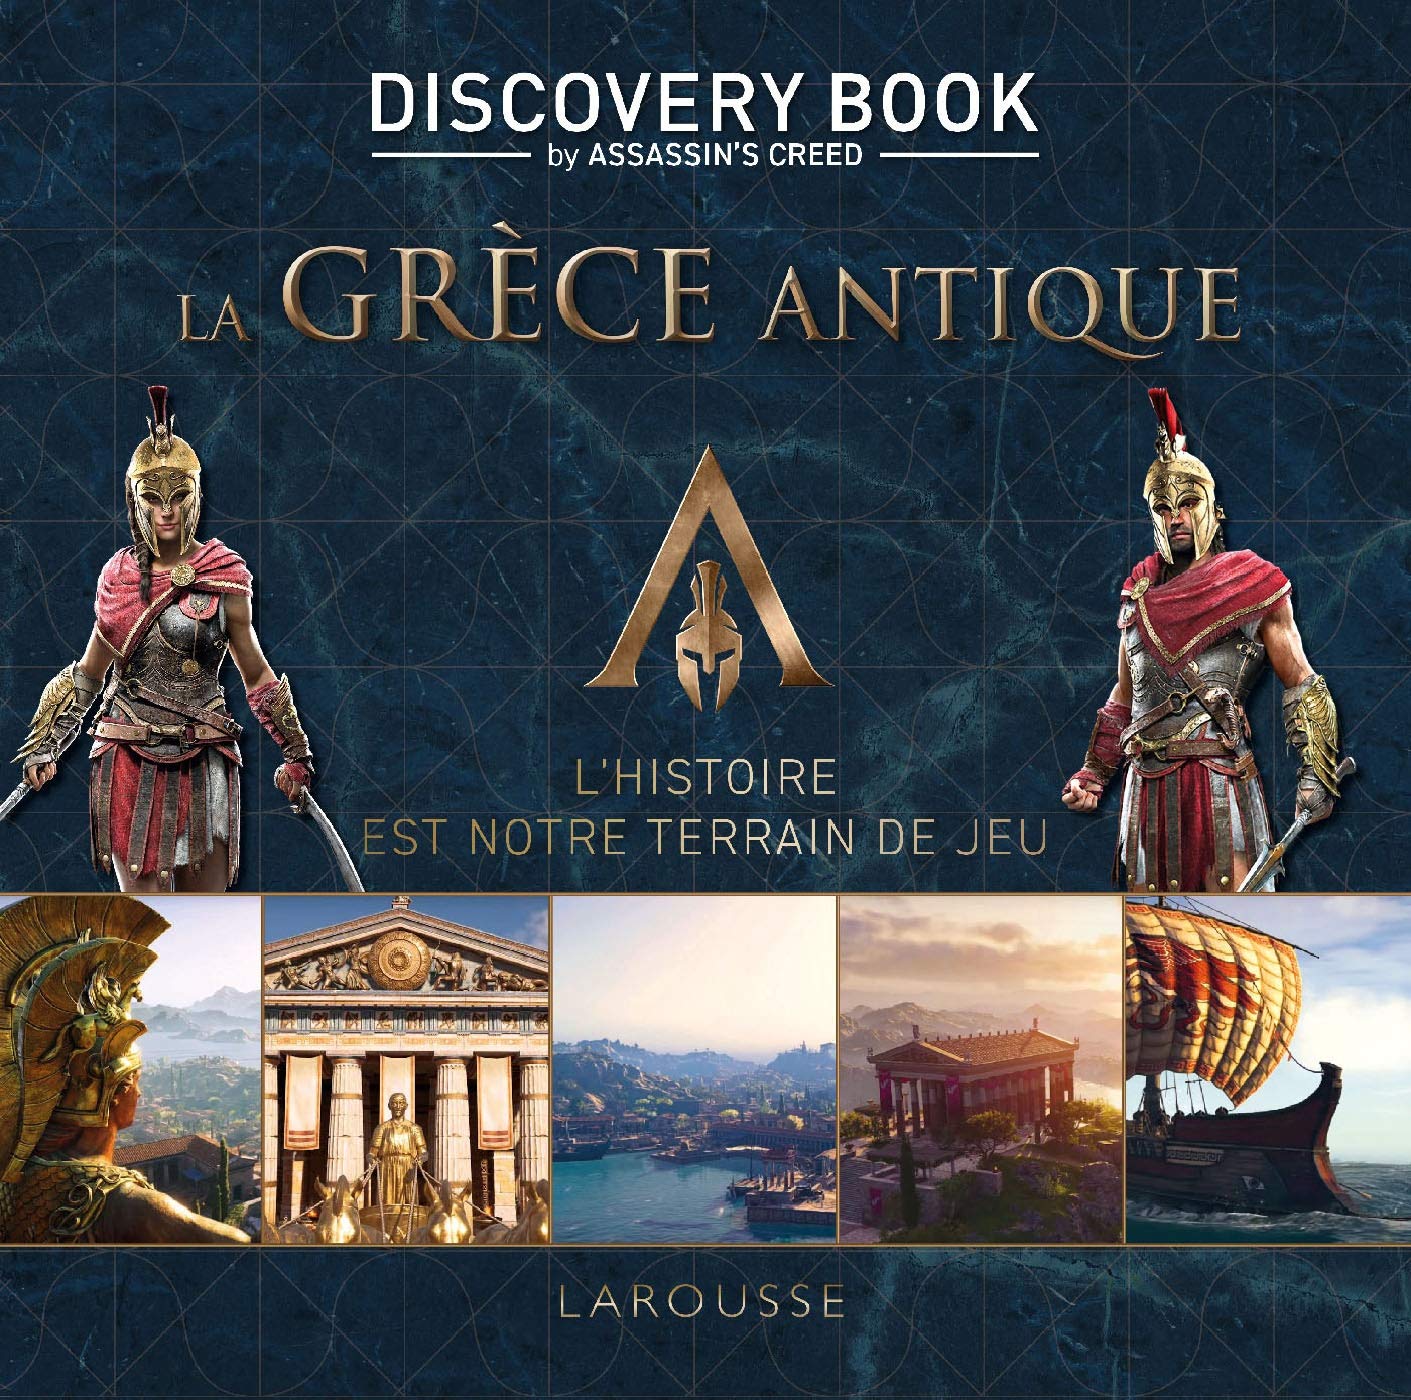 Assassins Creed Discovery Tour Grece Antique